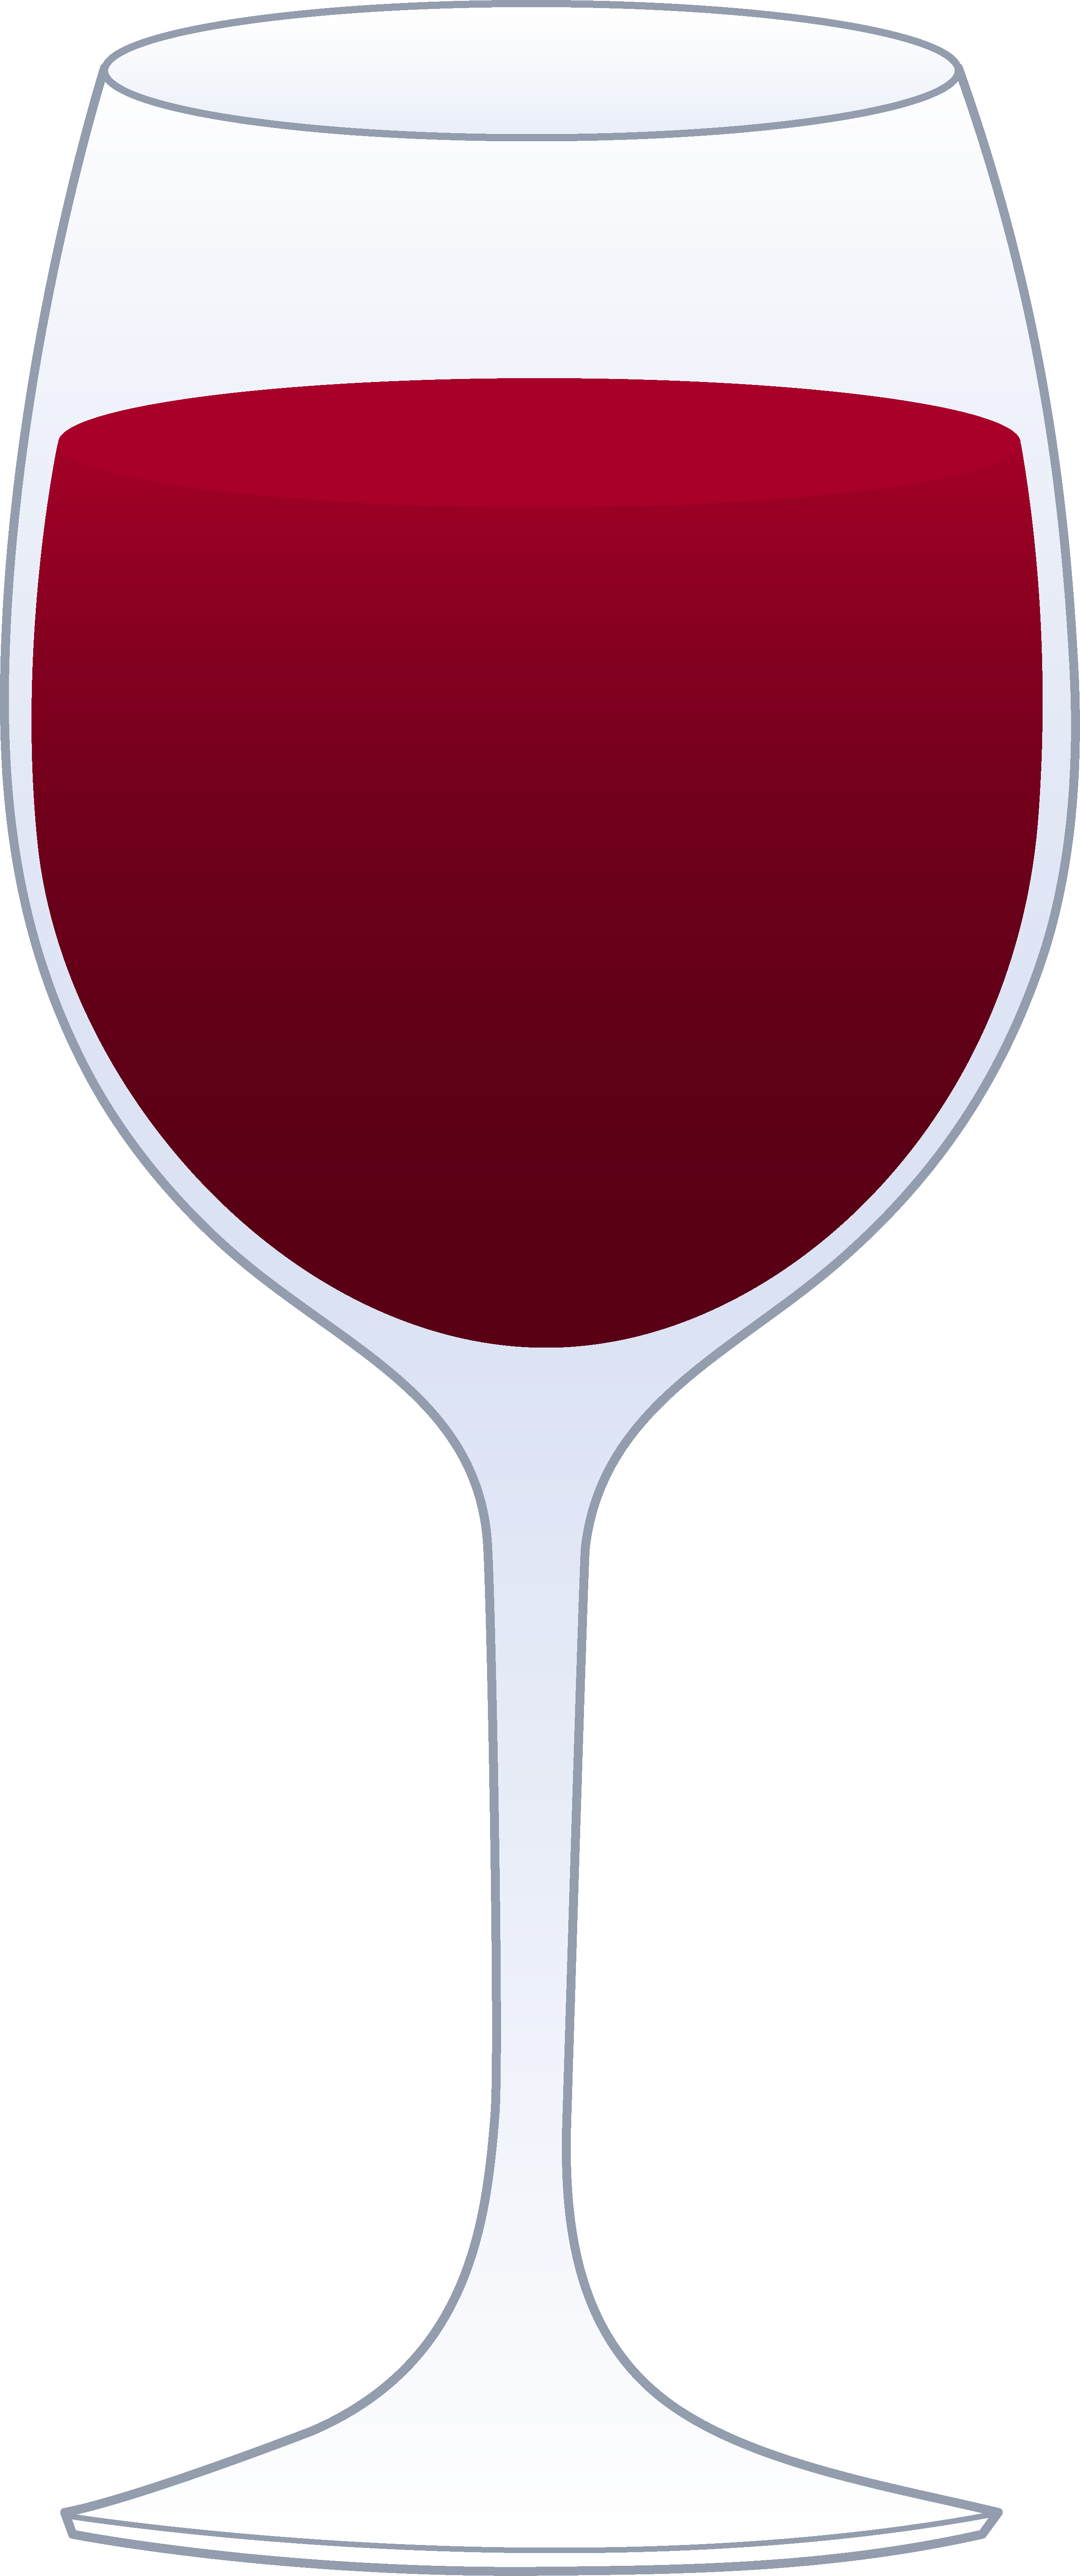 Wine glass vector clipart